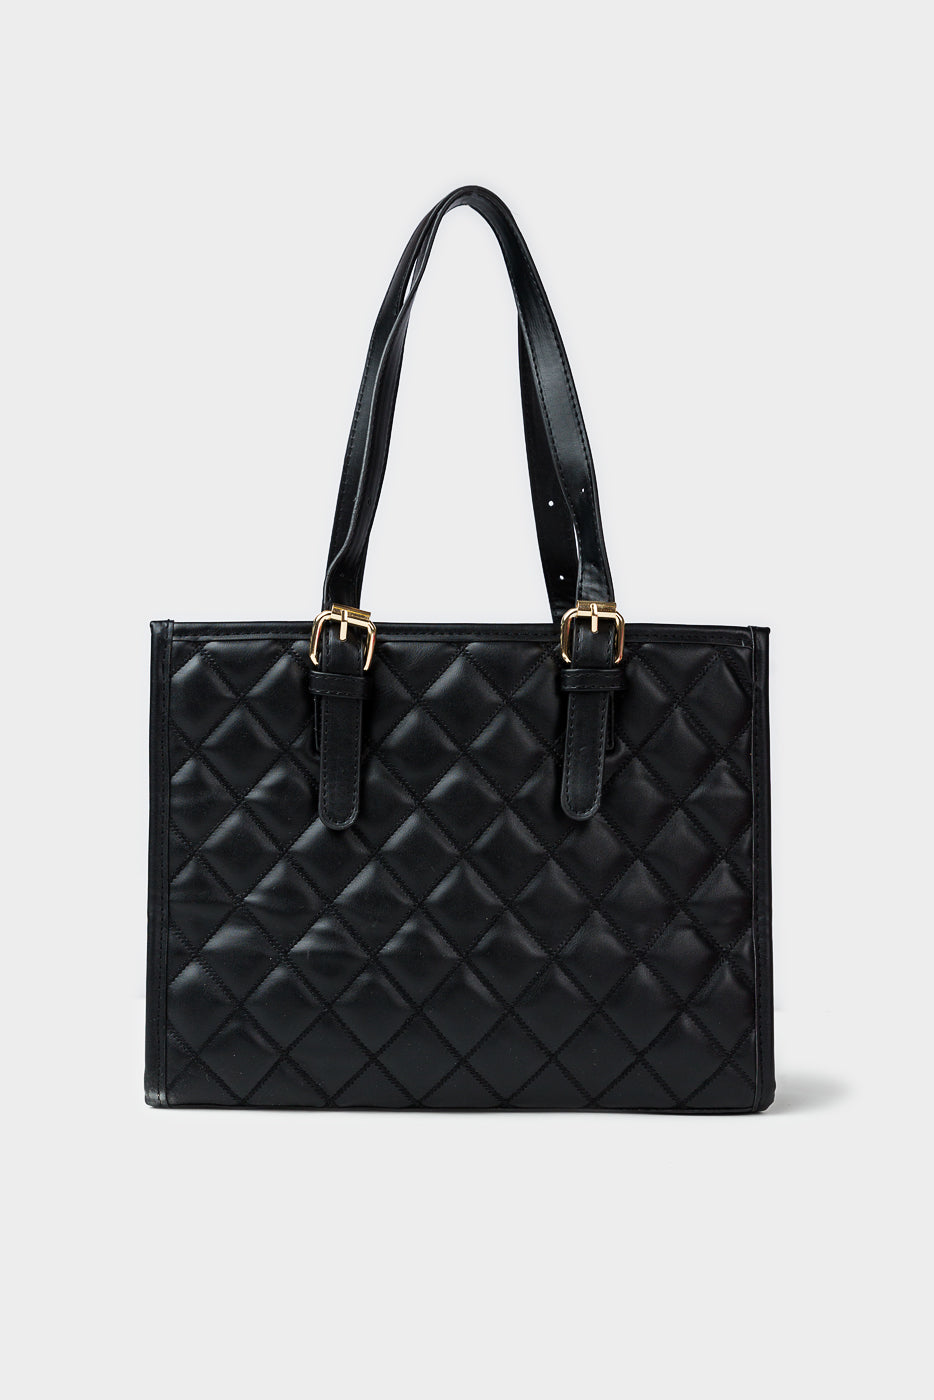 Handbag For Women | Ladies Shoulder Bags | Designer Bags Shopping ...